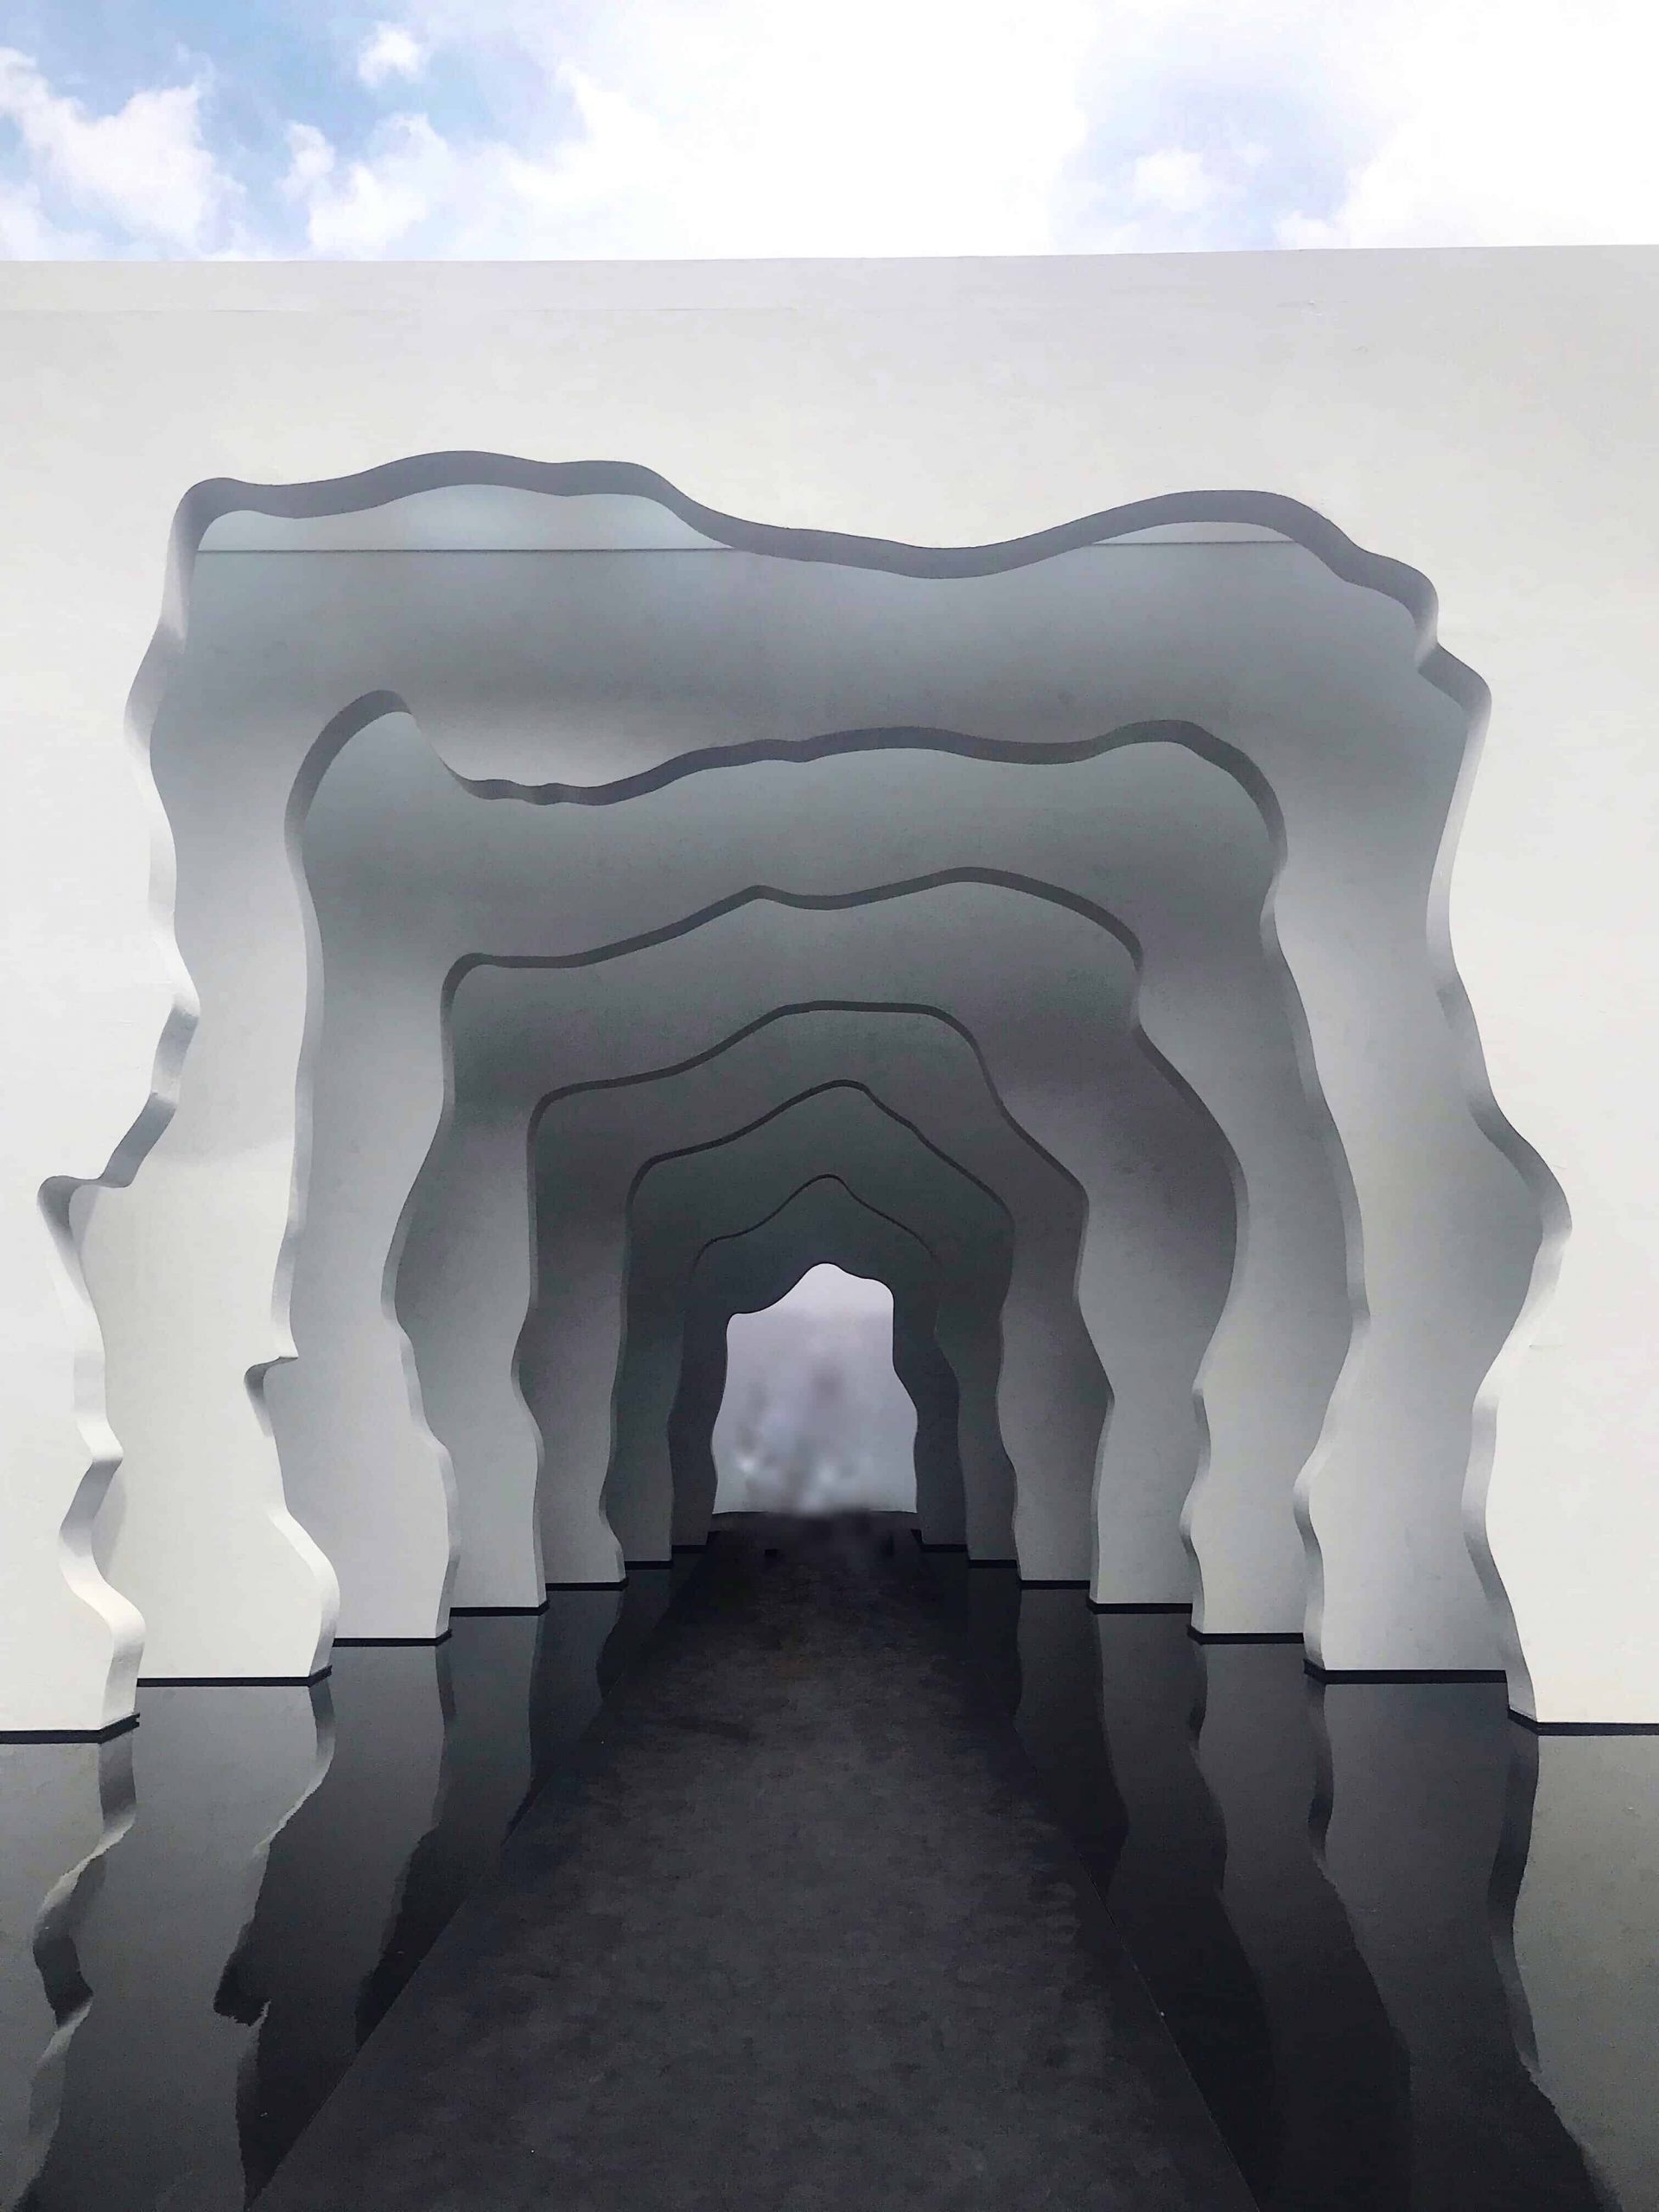 Divided Layers installation by Daniel Arsham for Kohler